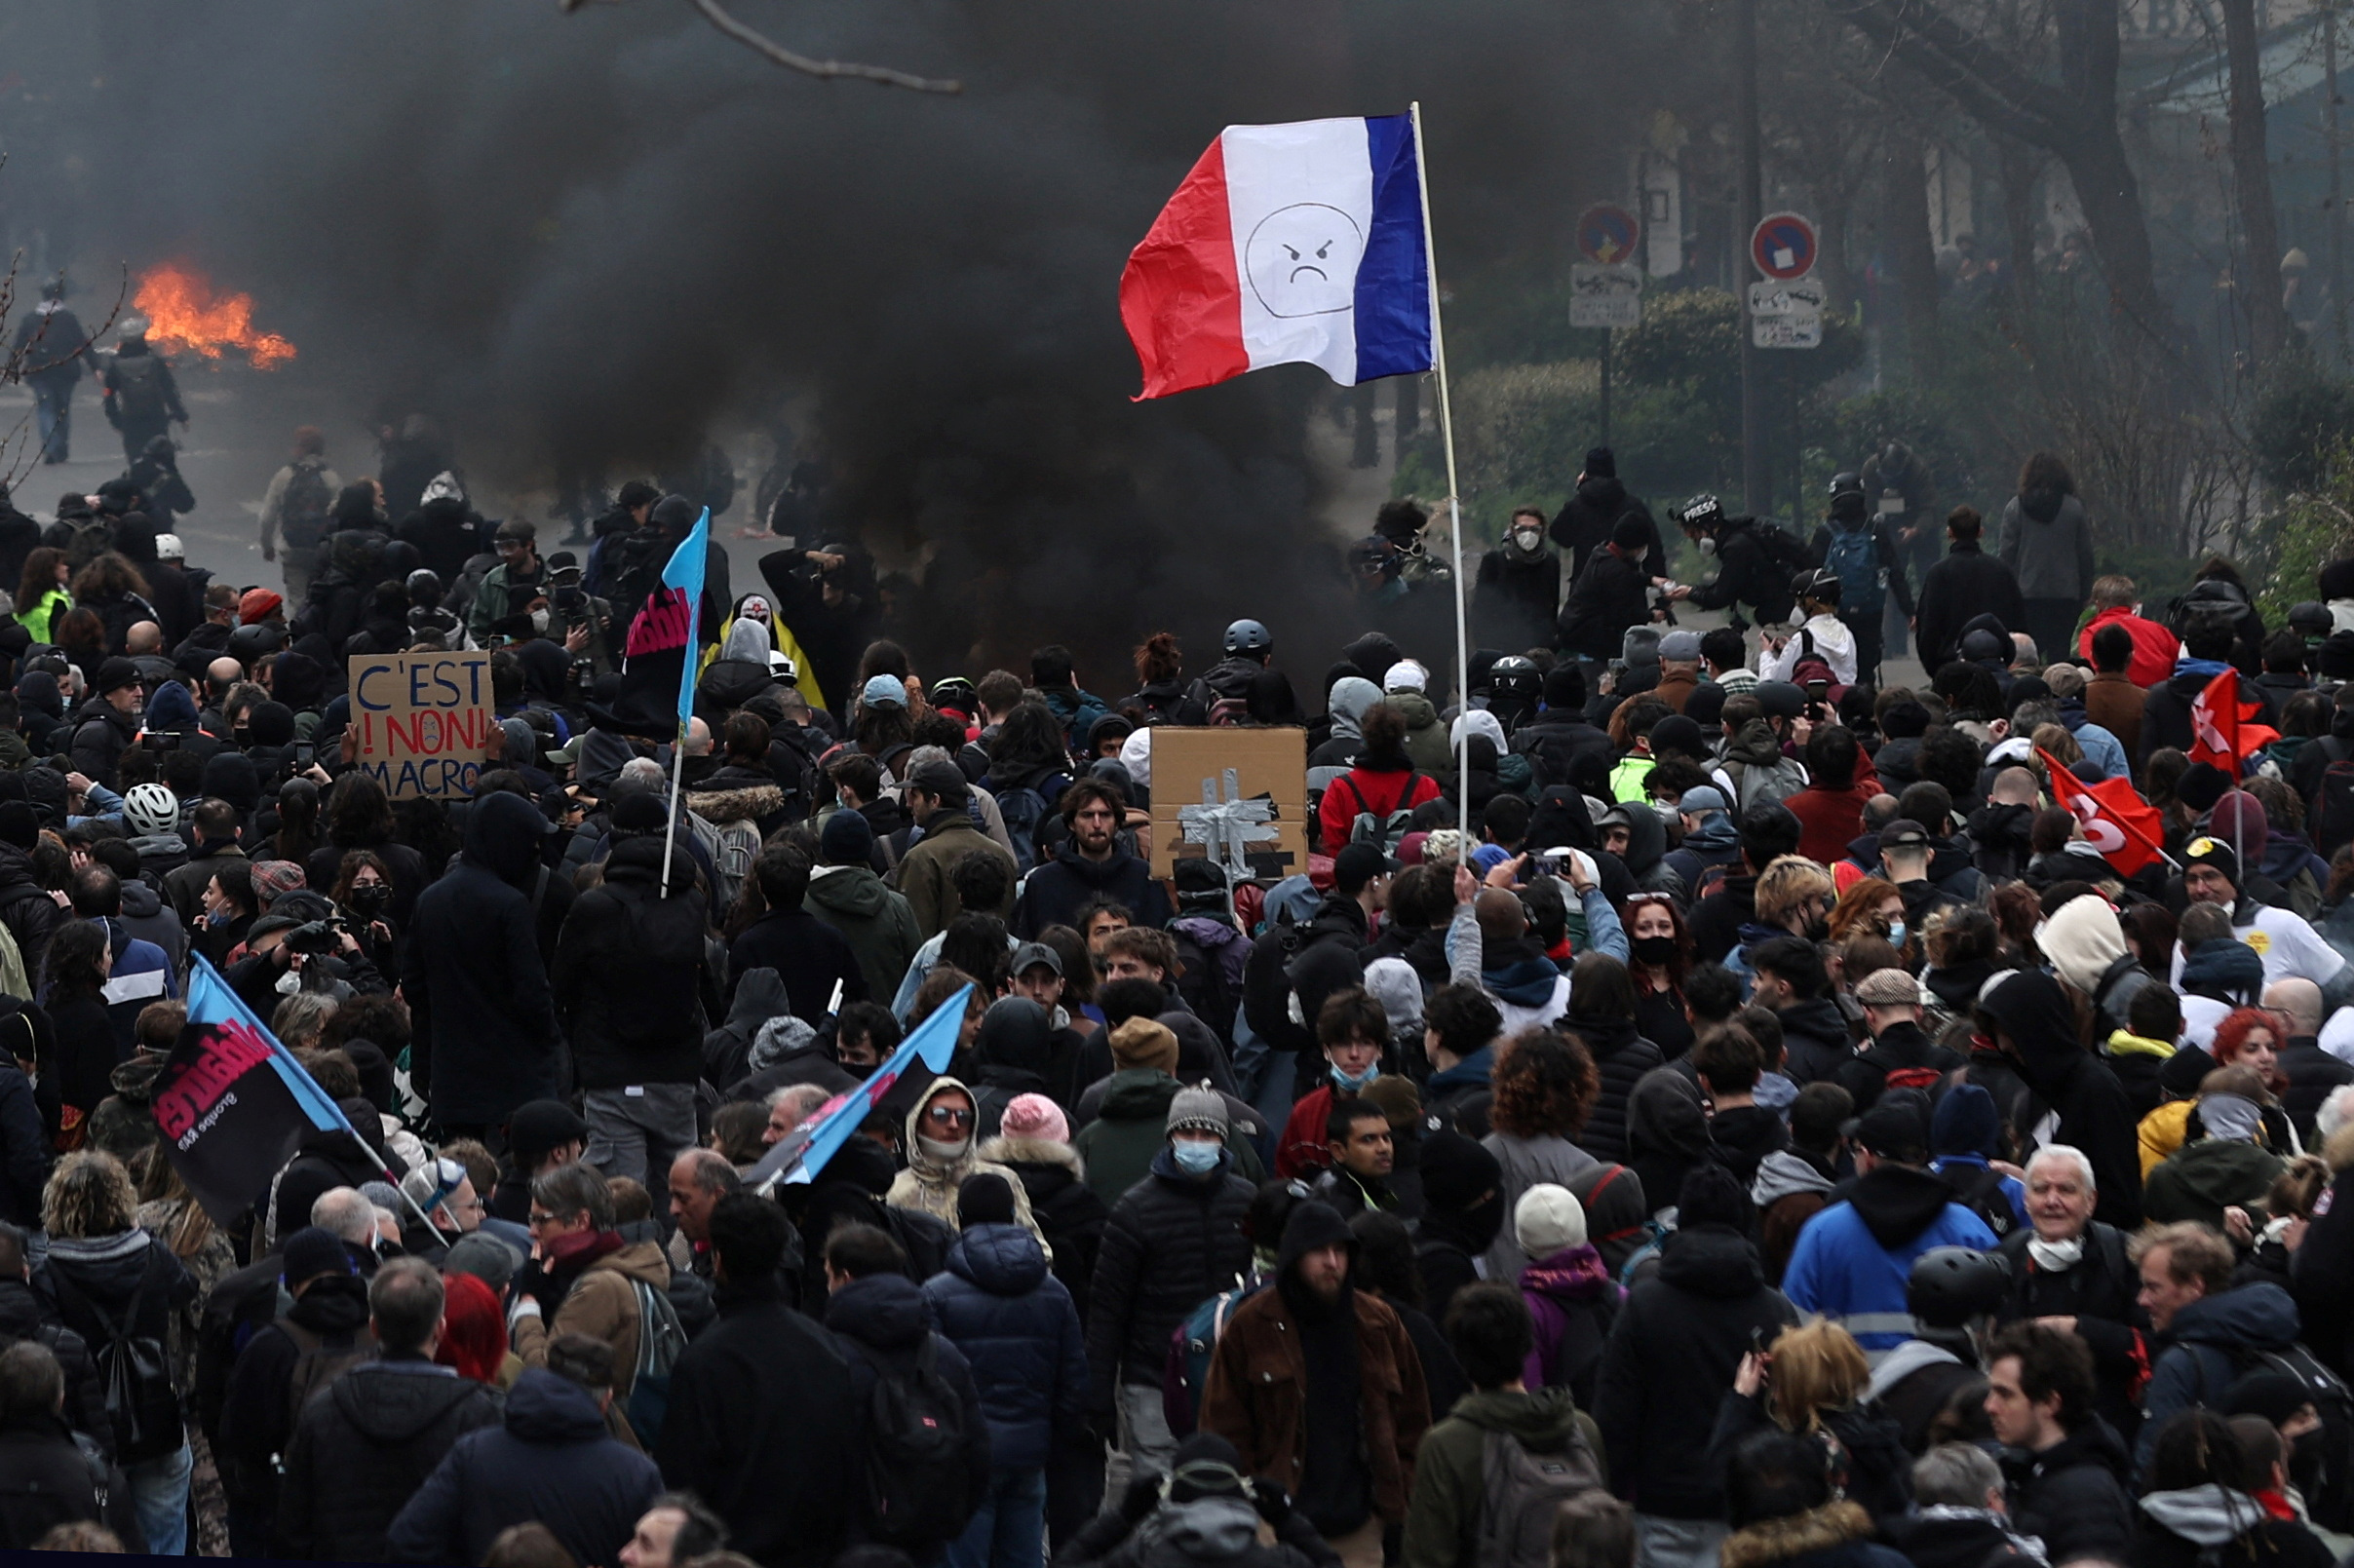 SPR Informa Atacan casa de alcalde en Francia durante protestas